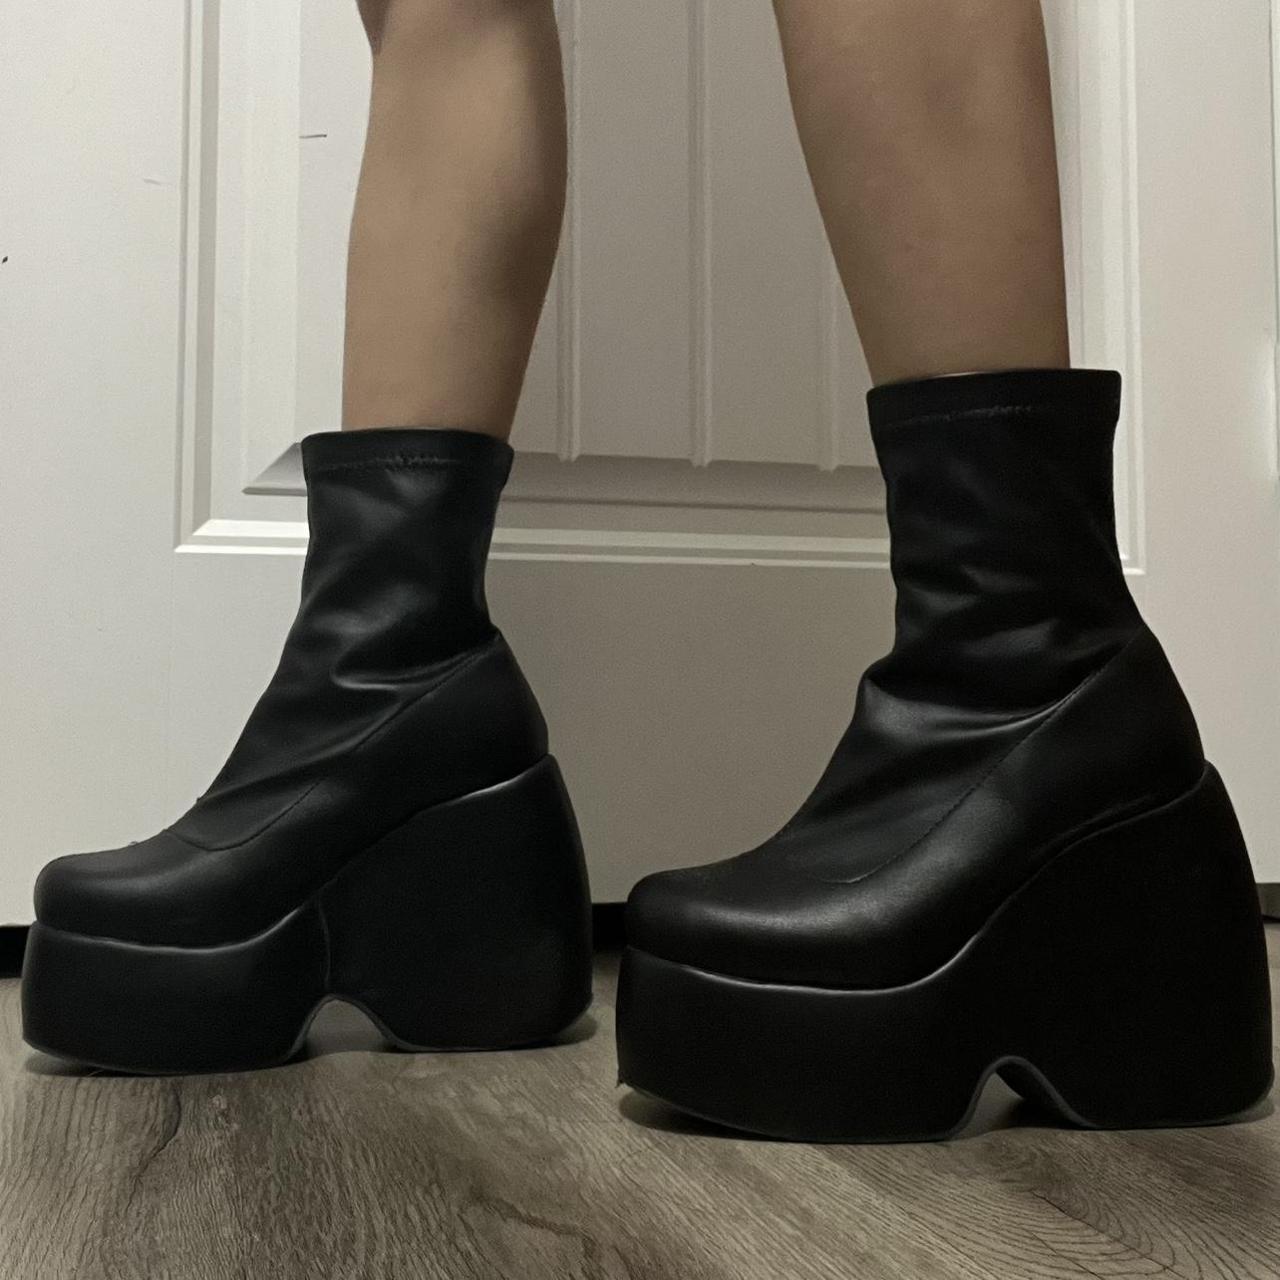 VOMIRA black pleather platform boots Heel ~3... - Depop